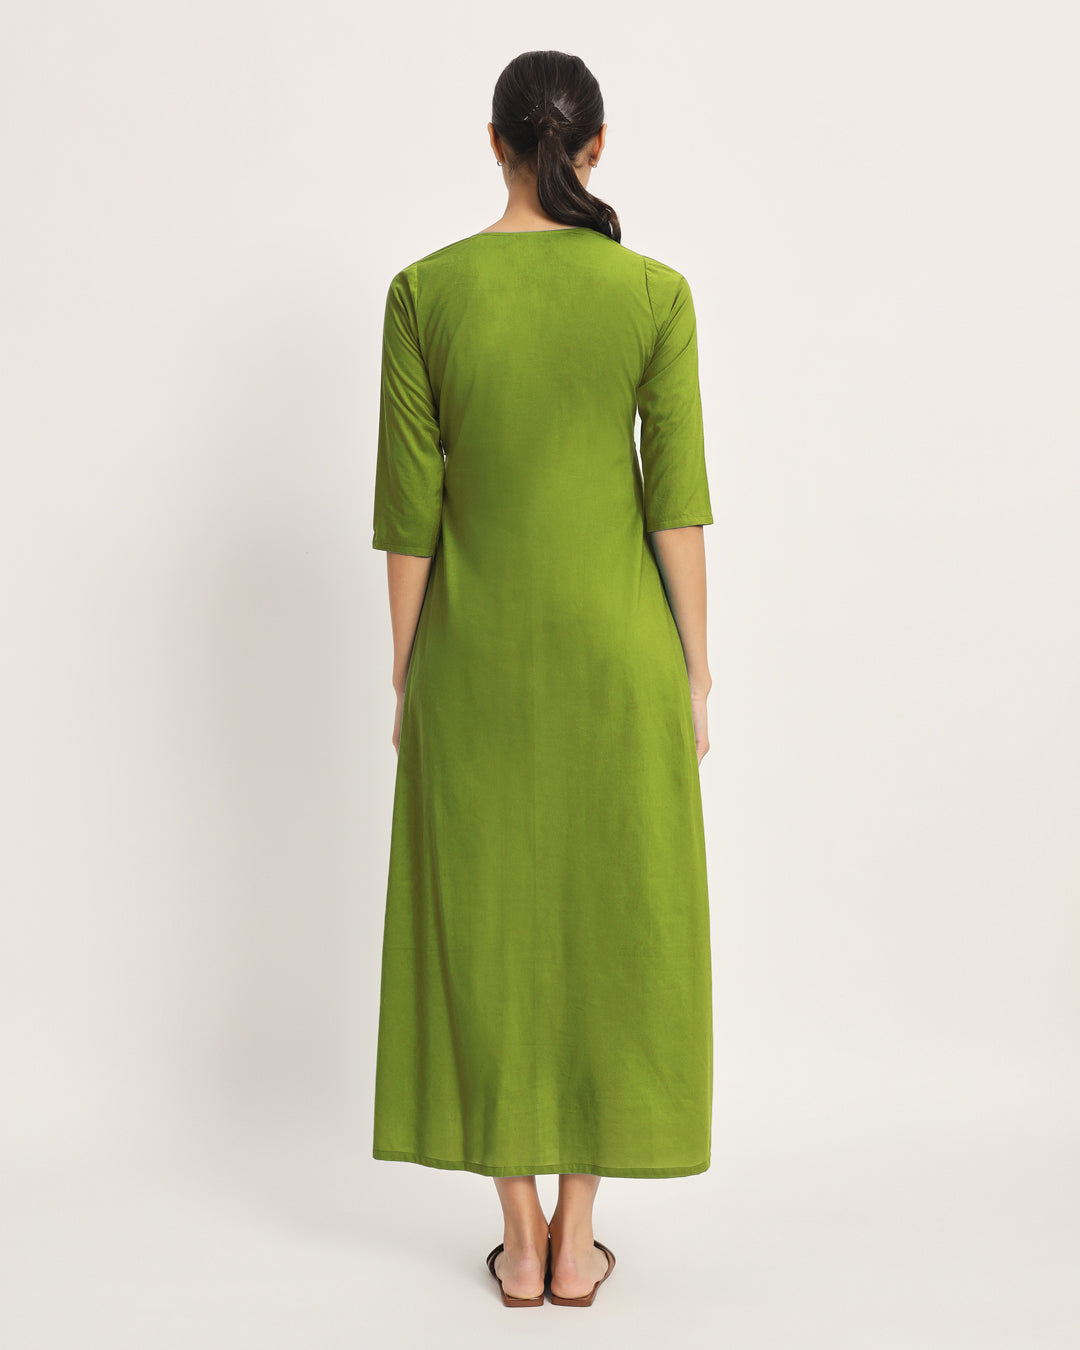 Combo: Iced grey & Sage Green Bump Comfort Maternity & Nursing Dress - Set of 2